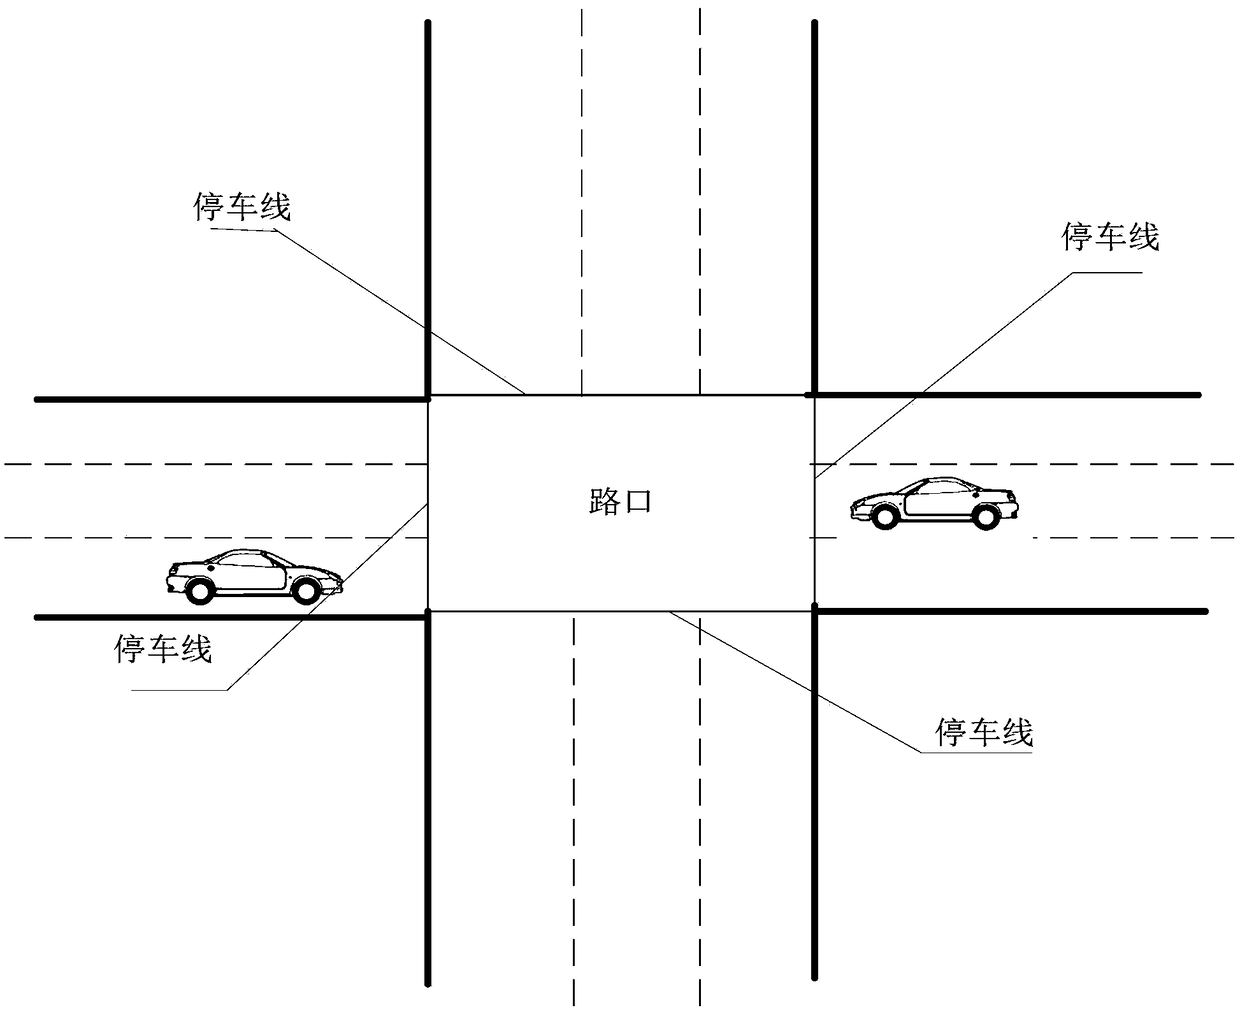 Intersection lane marking method, device and storage medium